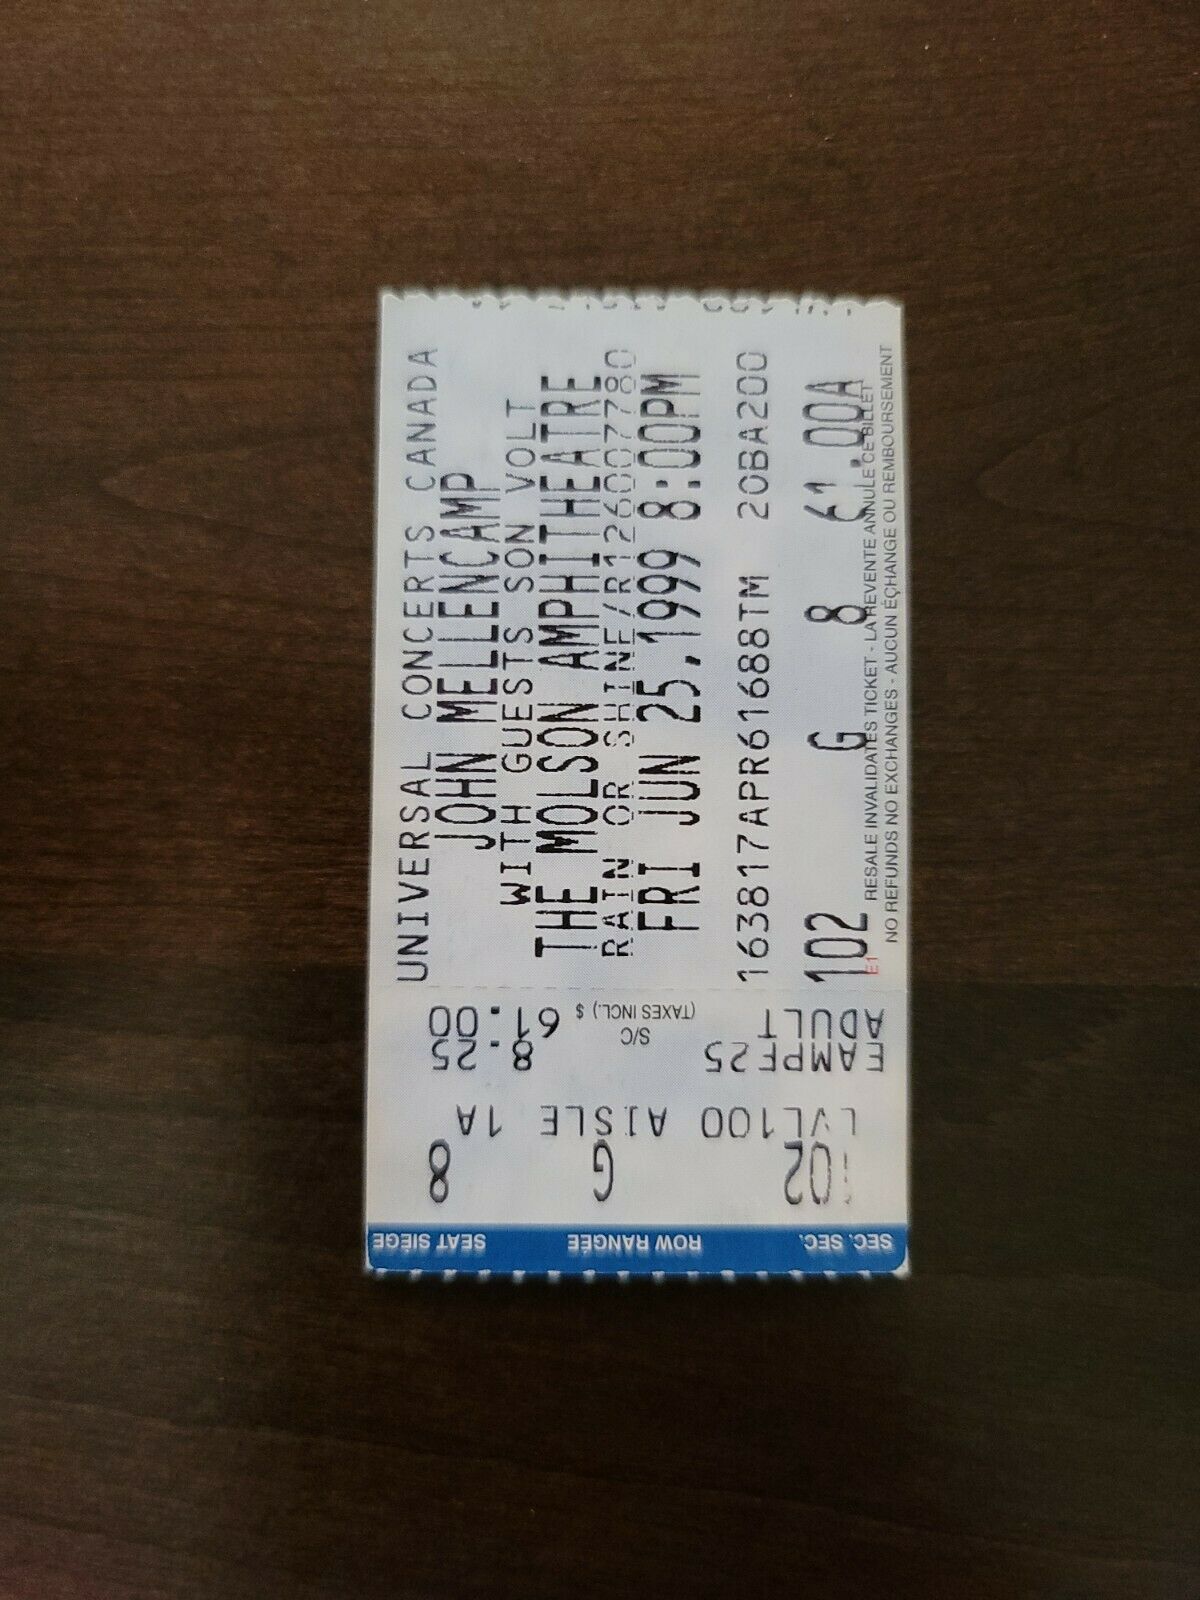 John Mellencamp 1999, Toronto Molson Amphitheater Original Concert Ticket Stub